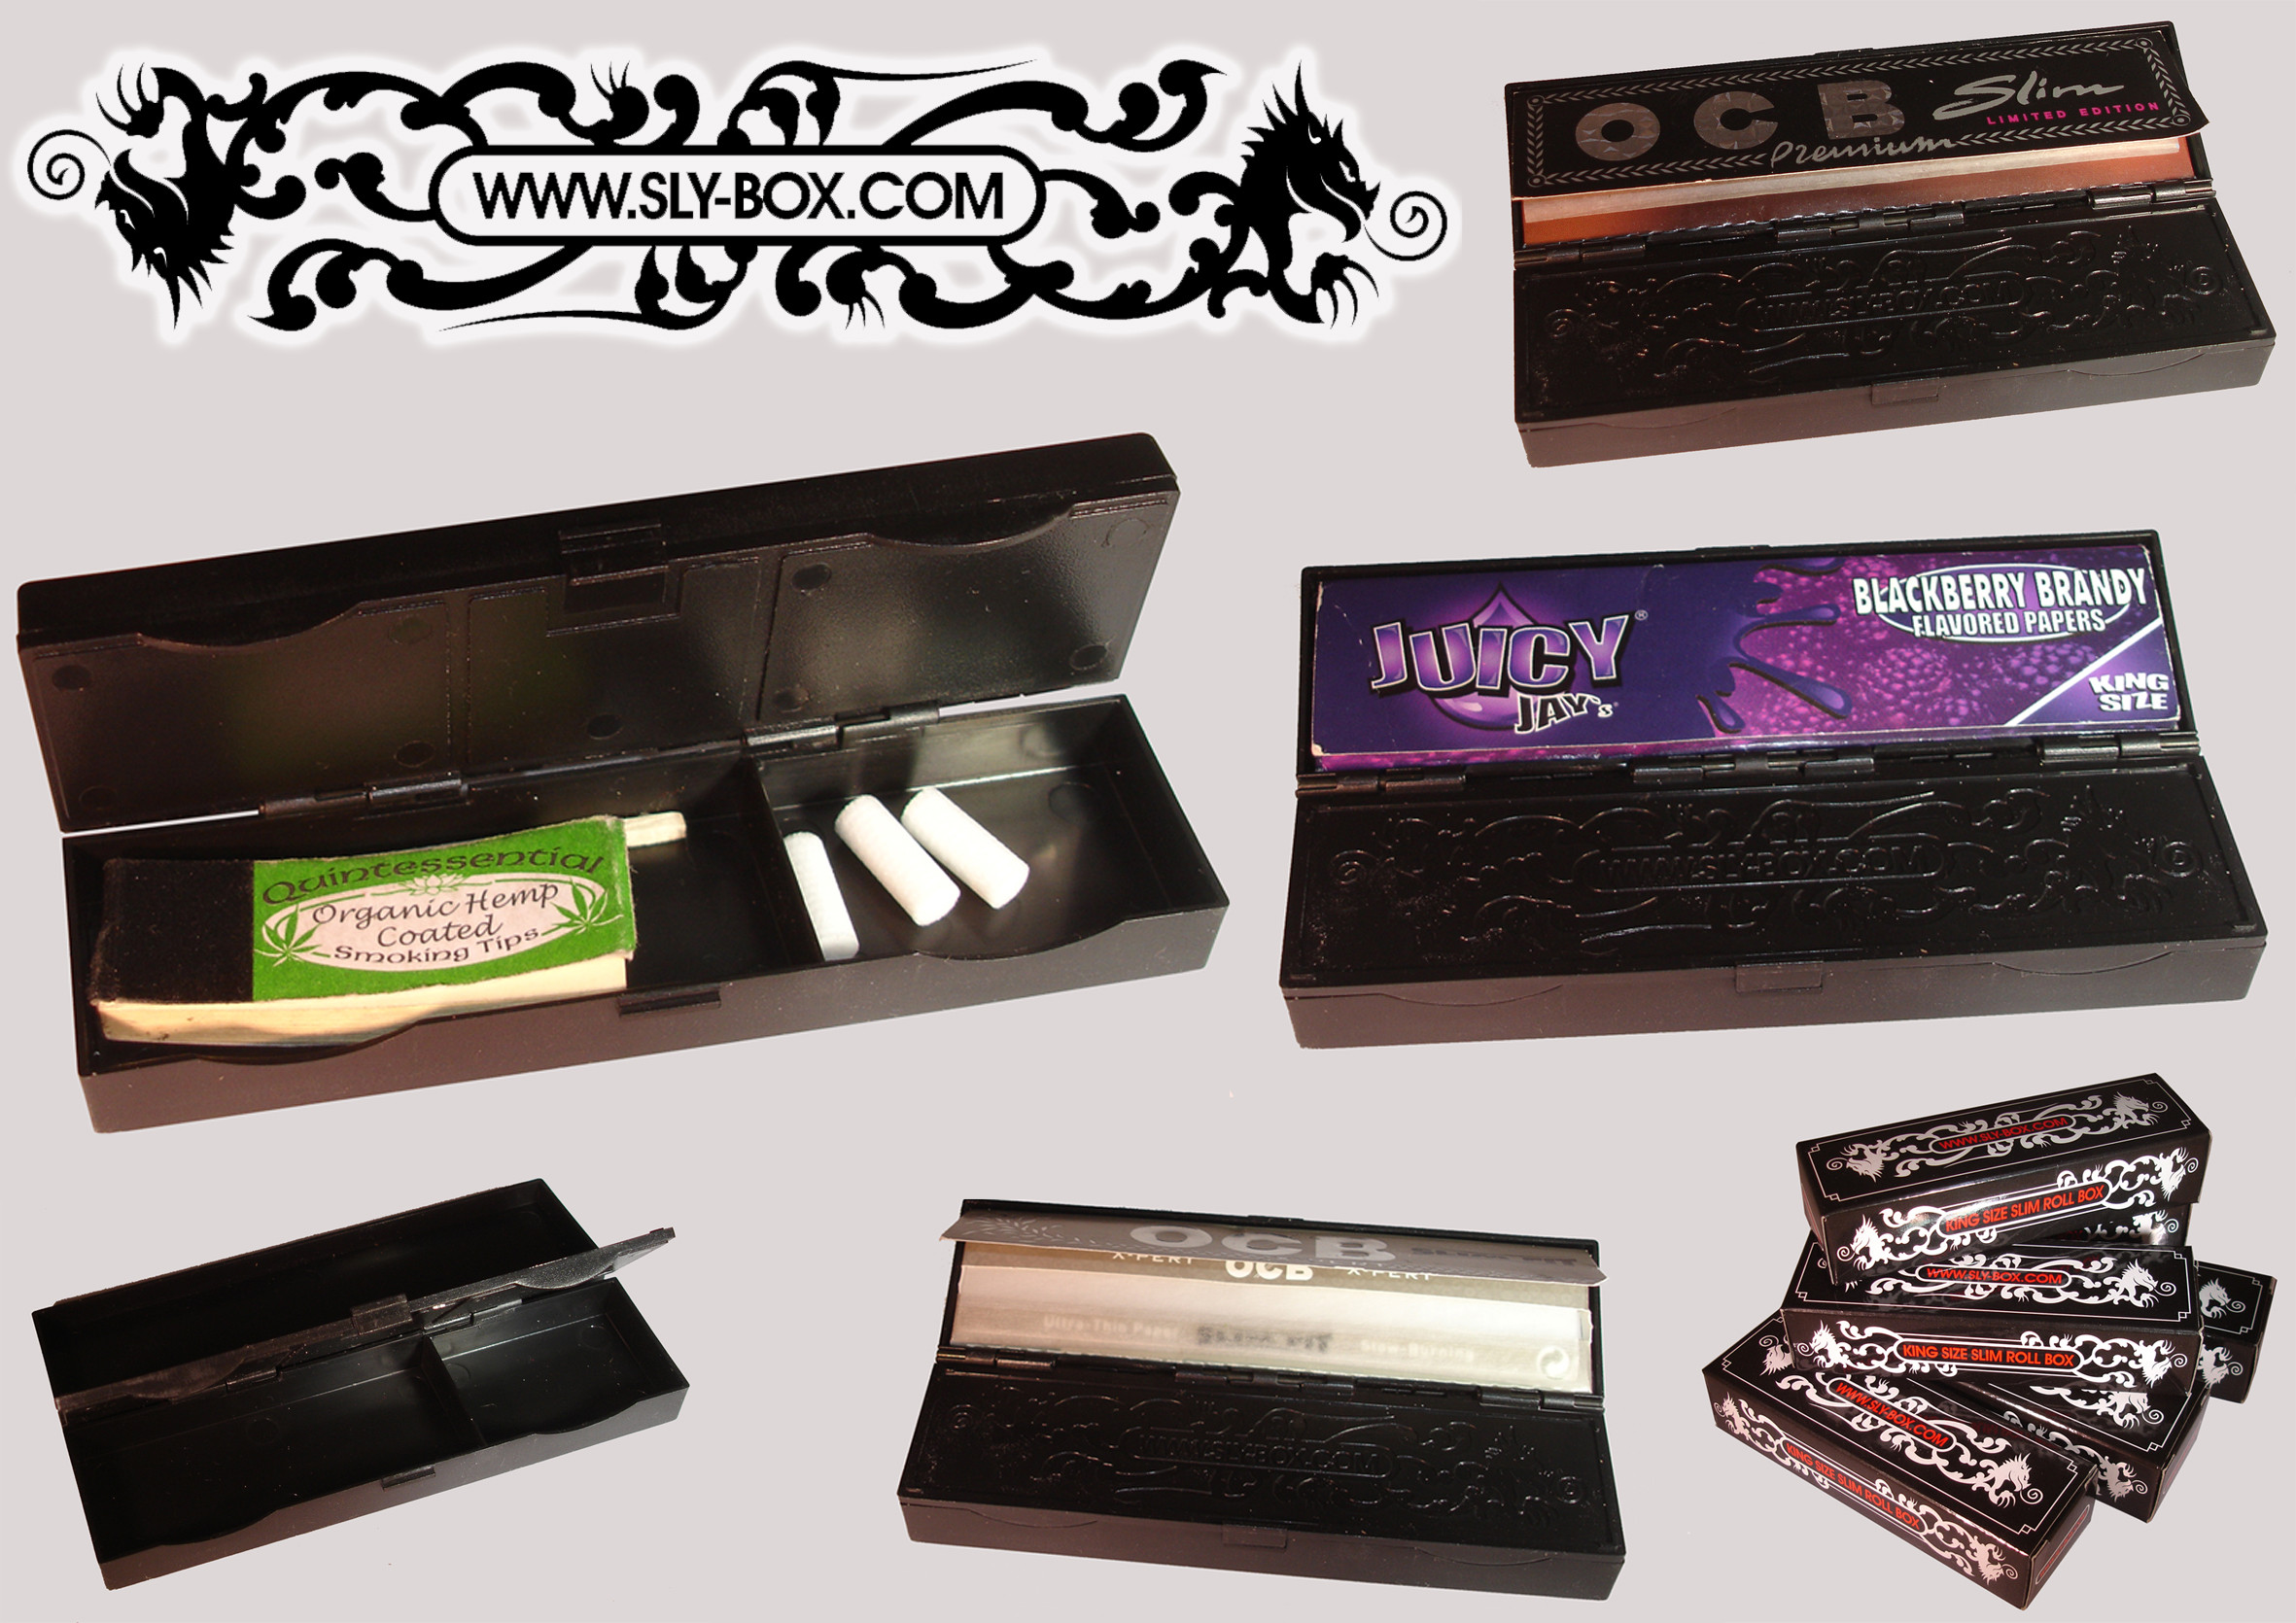 SLYBOX - King Size Slim Roll Box (Inc. Free pack of Raw KS)